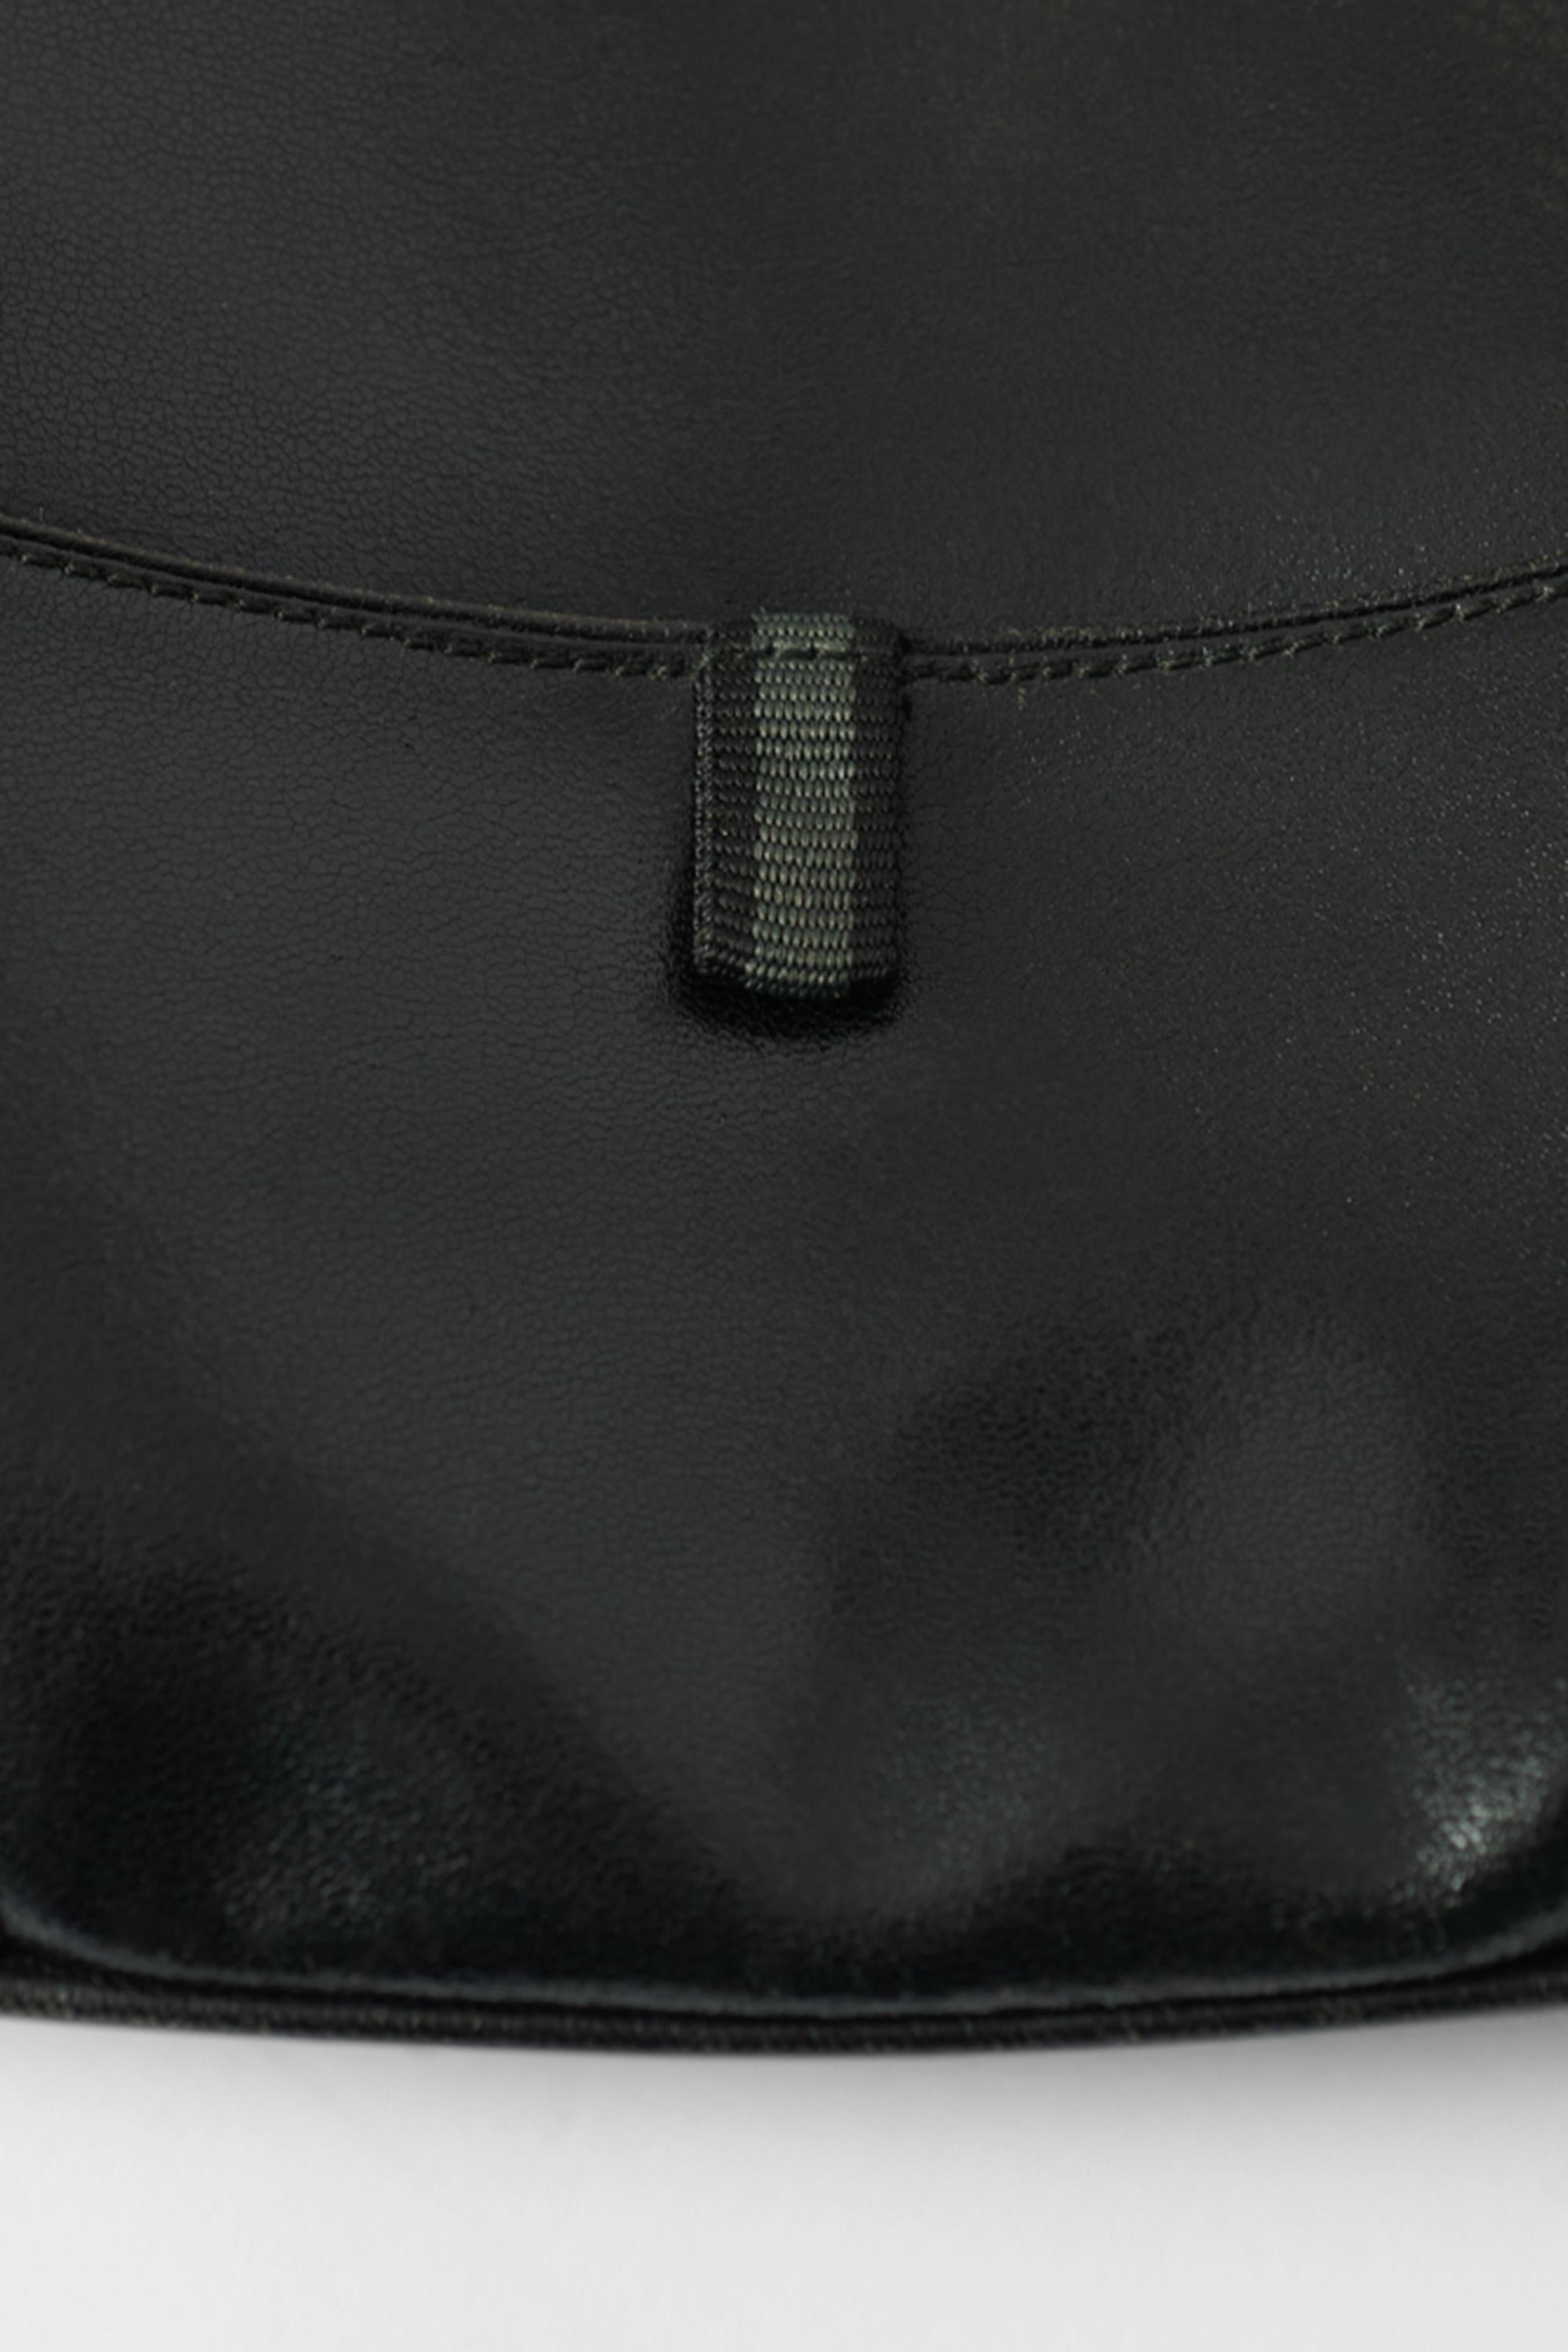 Miu Miu Vintage Black Leather & Neoprene Perforated Bag 1